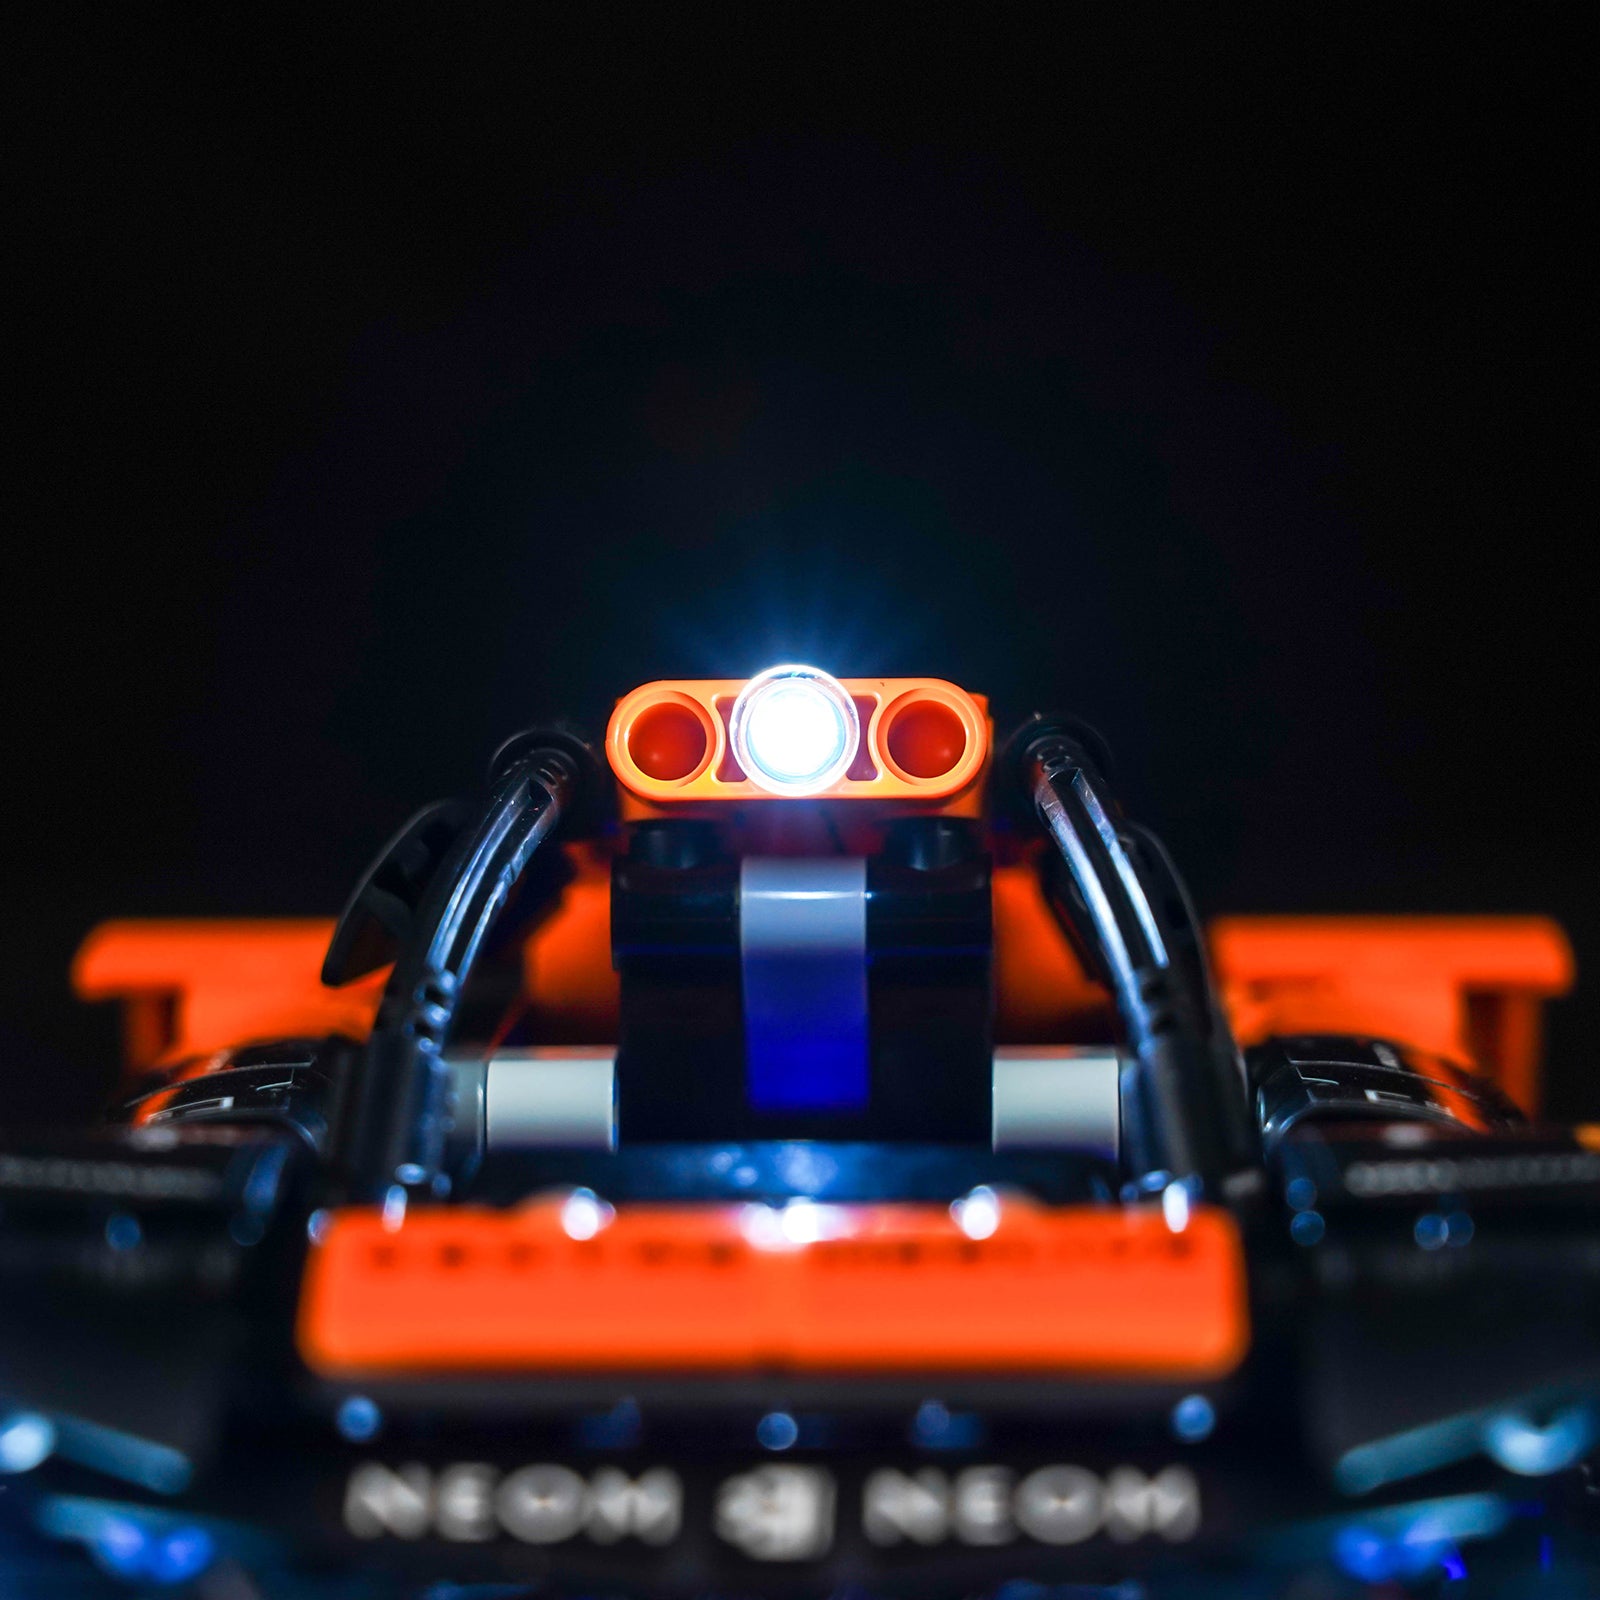 LEGO Technic 42166 NEOM McLaren Extreme E Race Car